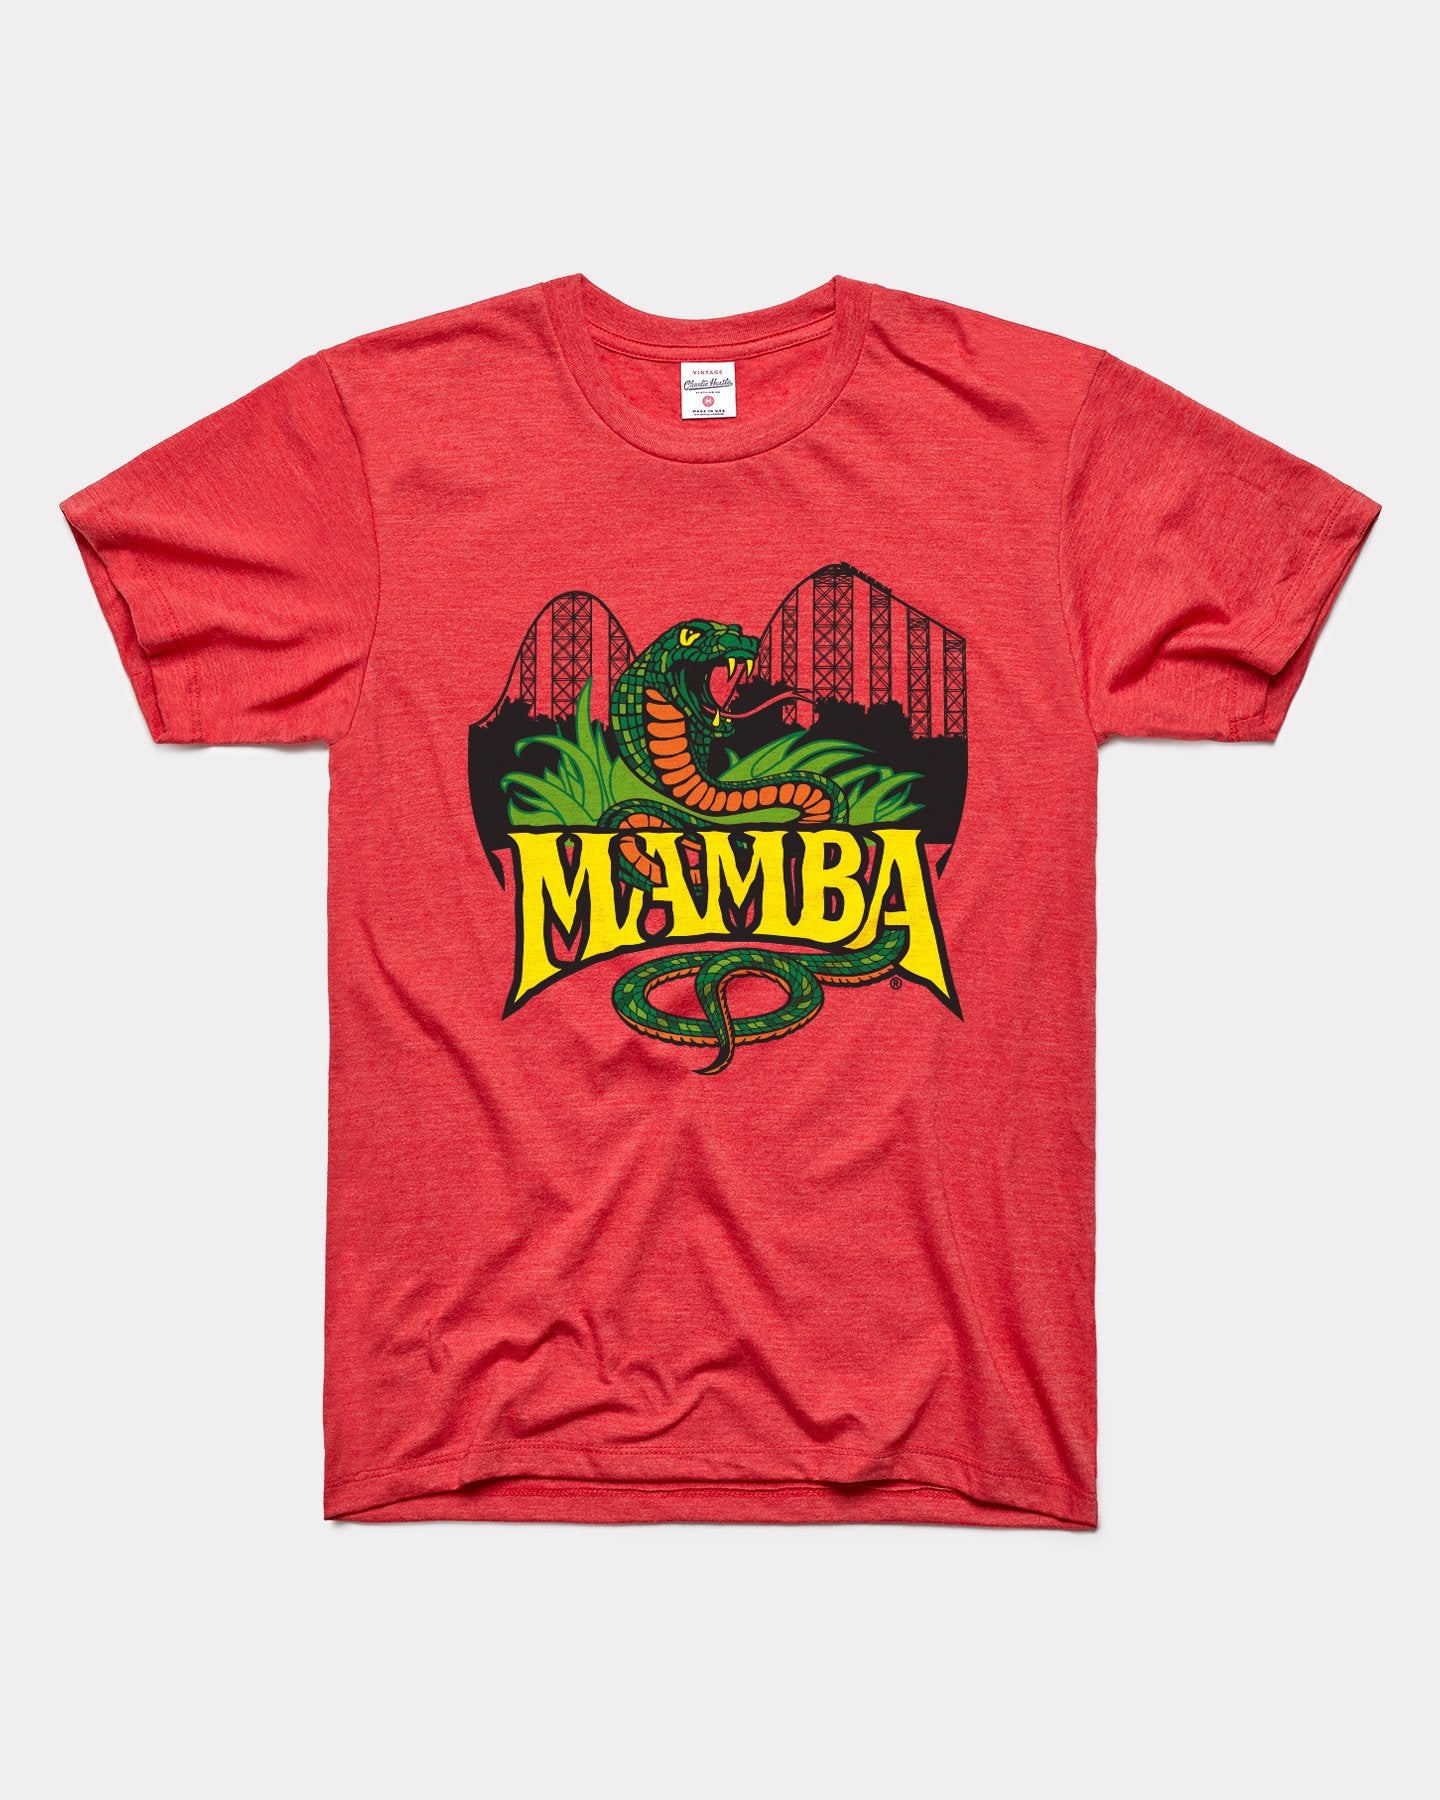 BLACK MAMBA T-Shirt